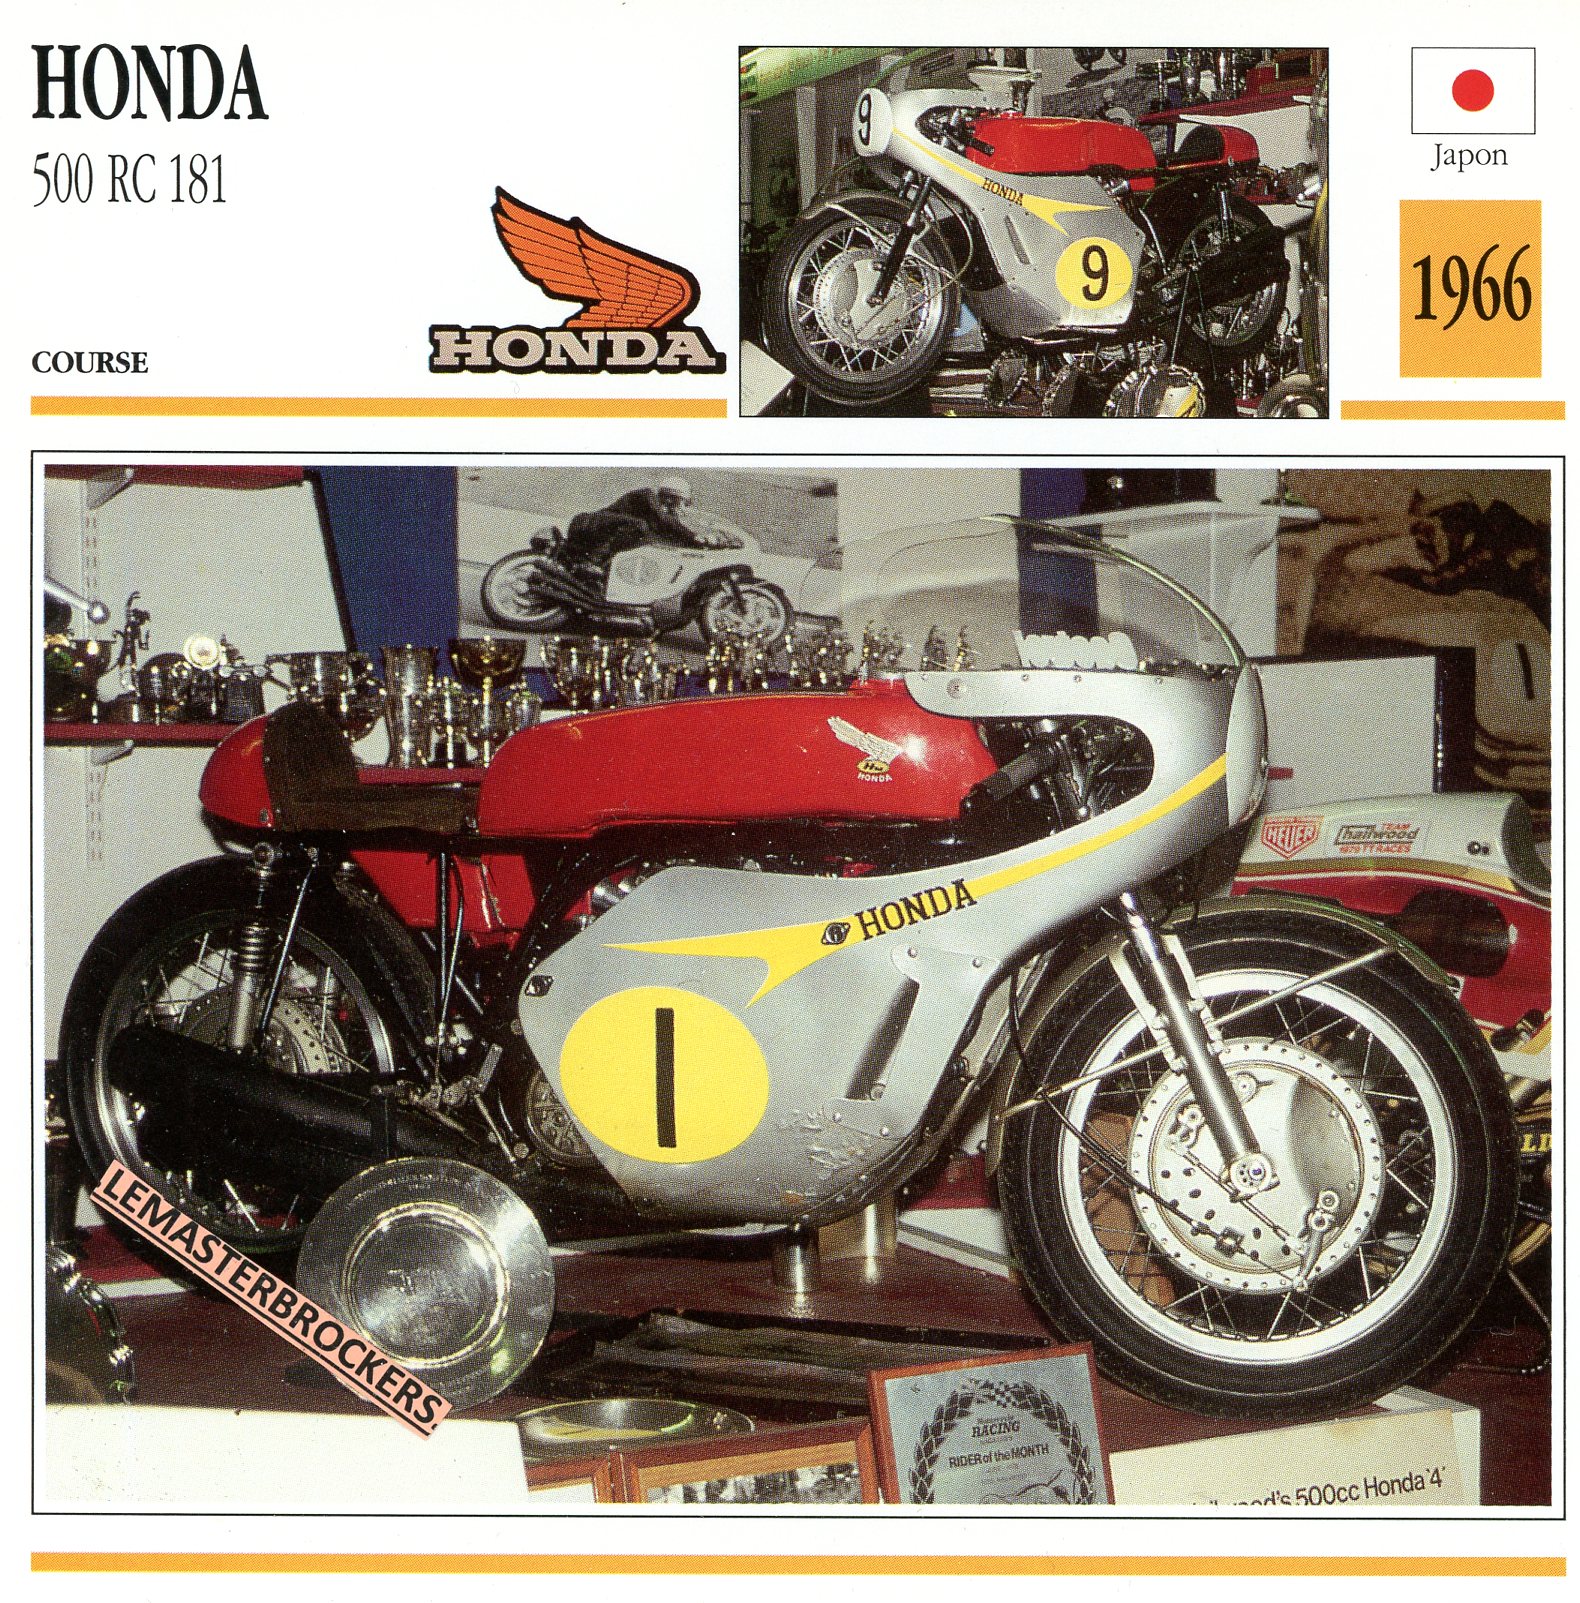 FICHE-MOTO-HONDA-500-RC-1981-1966-LEMASTERBROCKERS-CARS-MOTORCYCLE